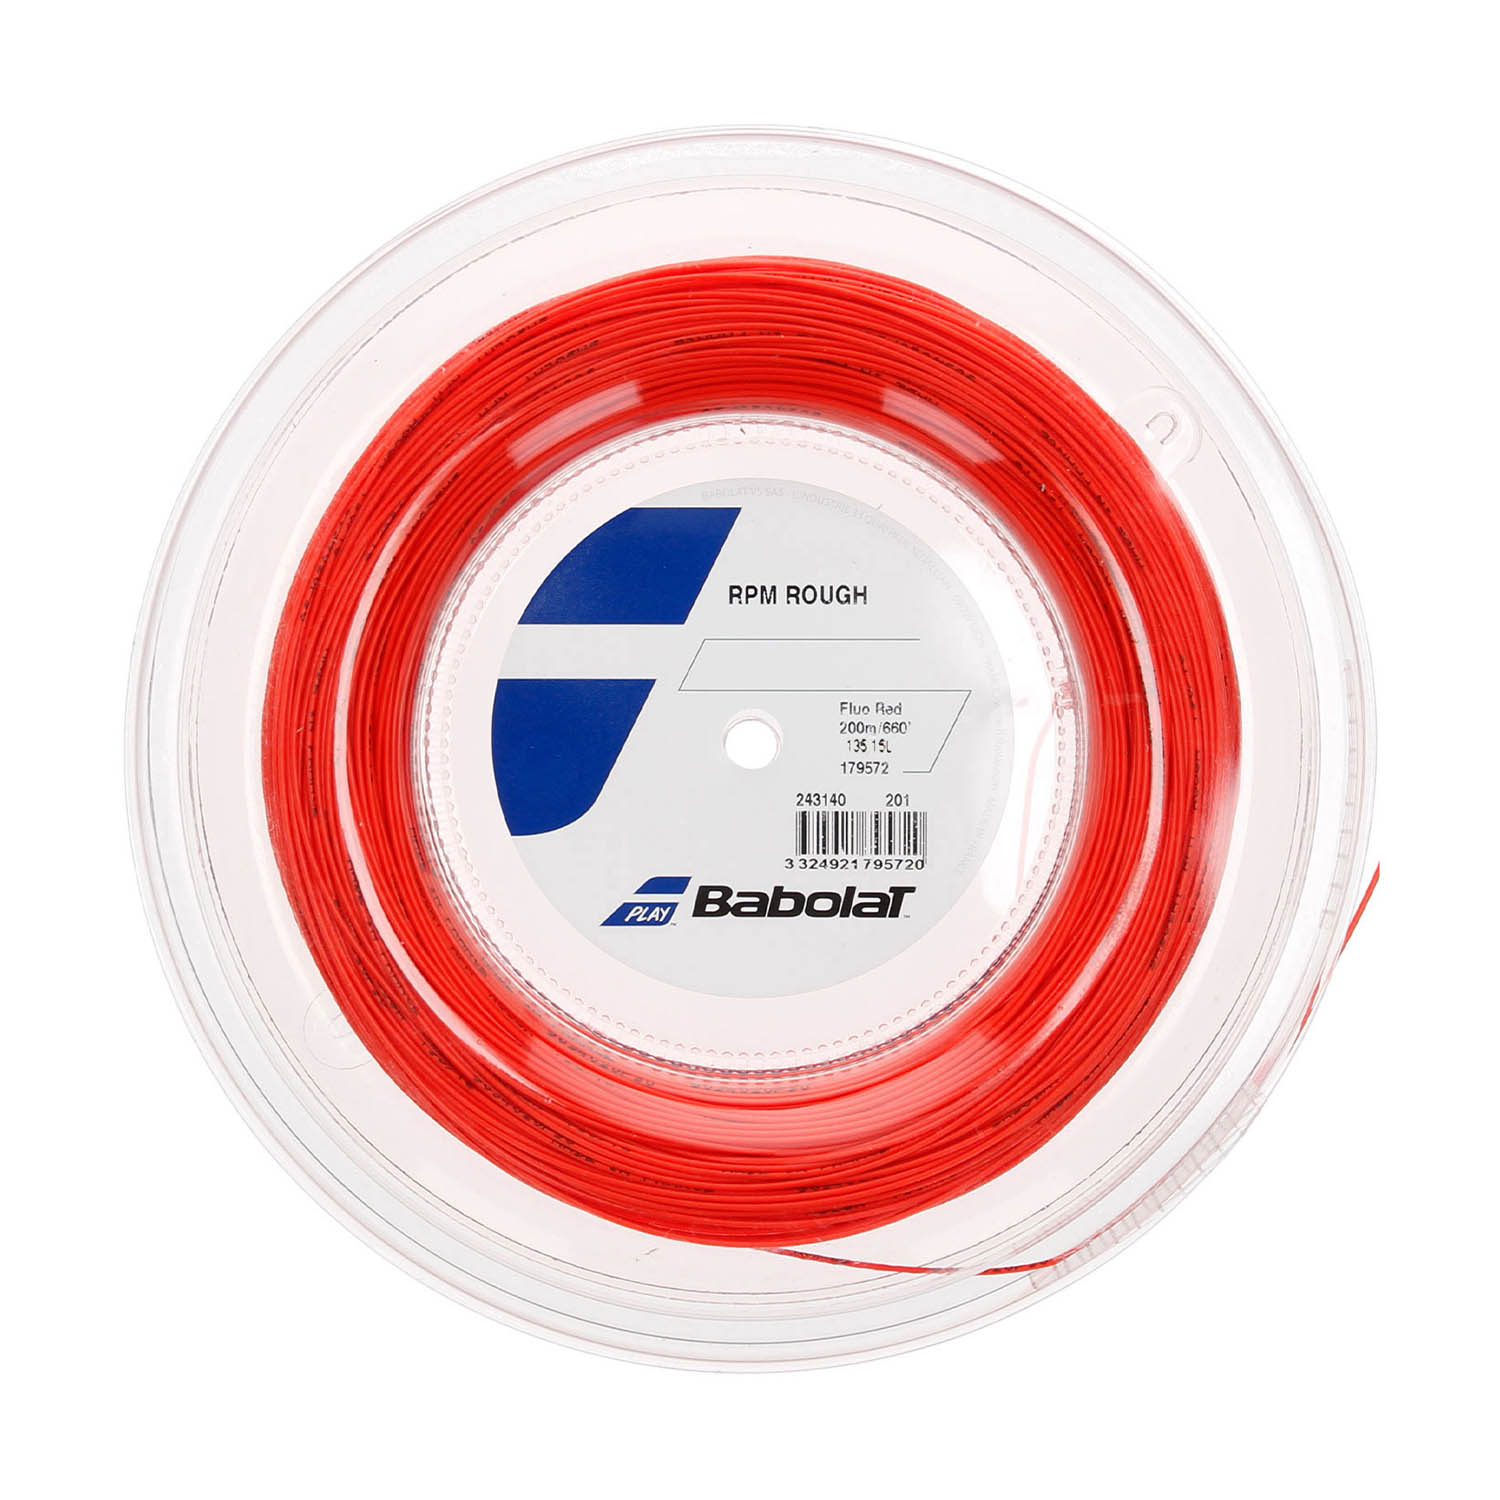 Babolat RPM Rough 1.35 Bobina 200 m - Red Fluo